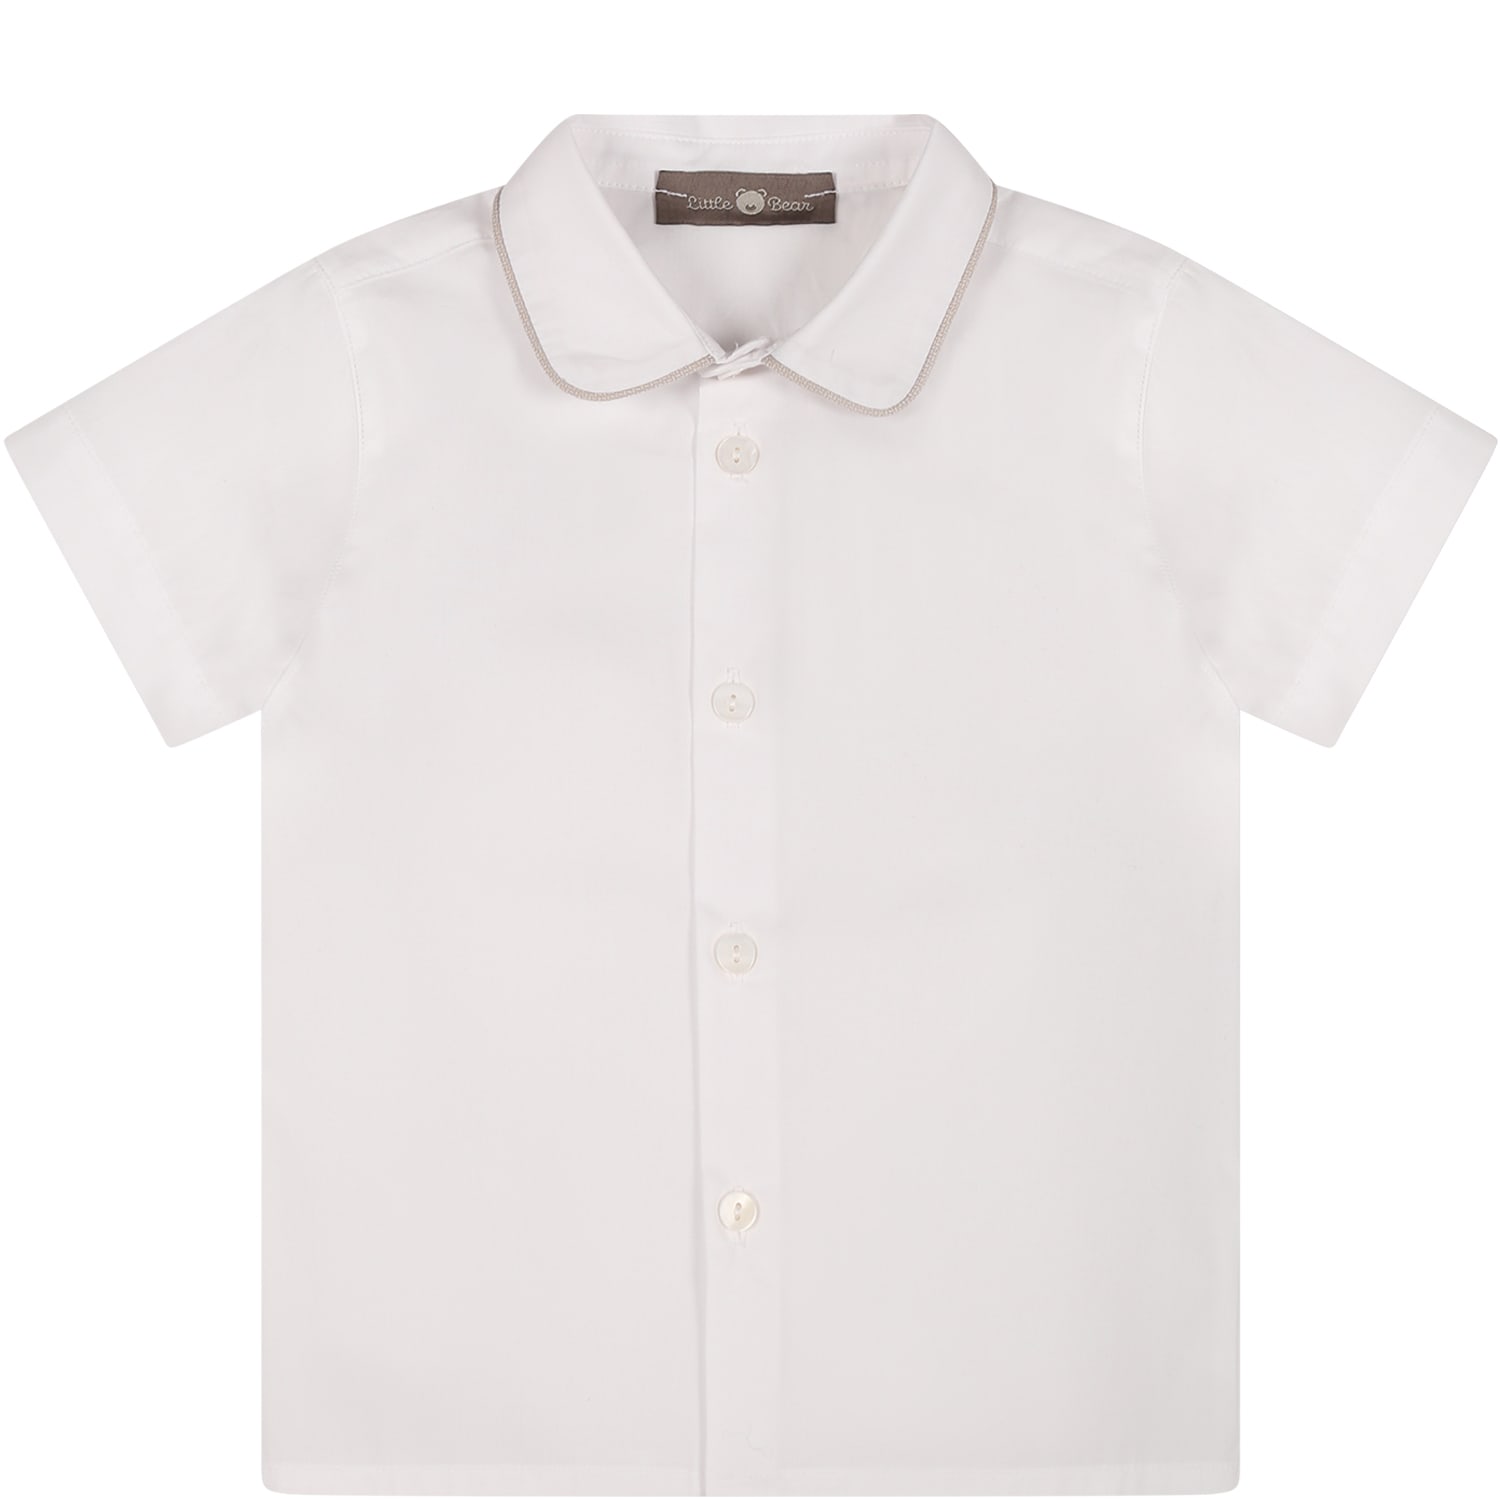 Little Bear White Shirt For Baby Boy